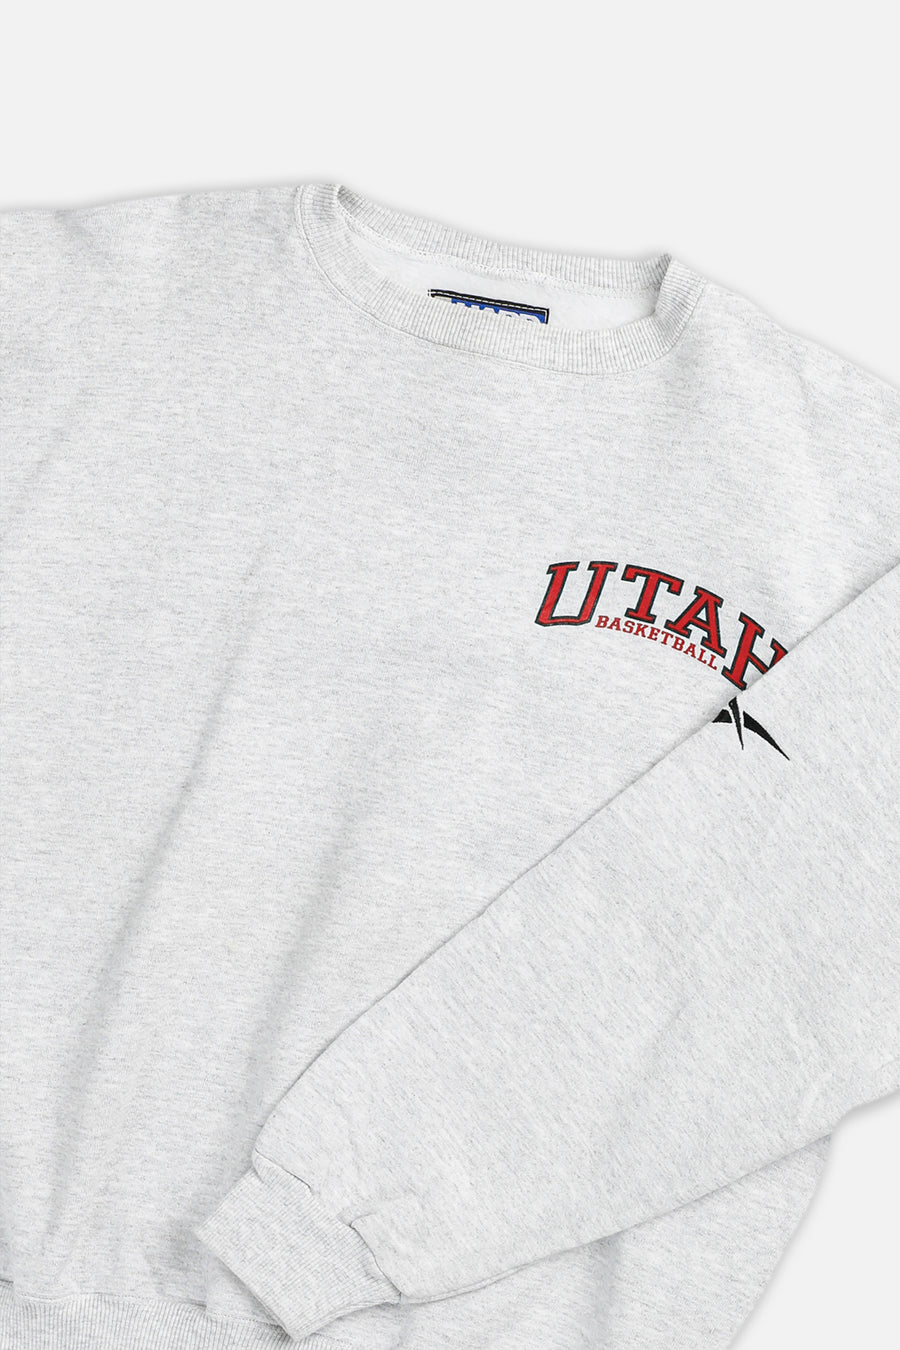 Vintage Utah Basketball Sweatshirt - M